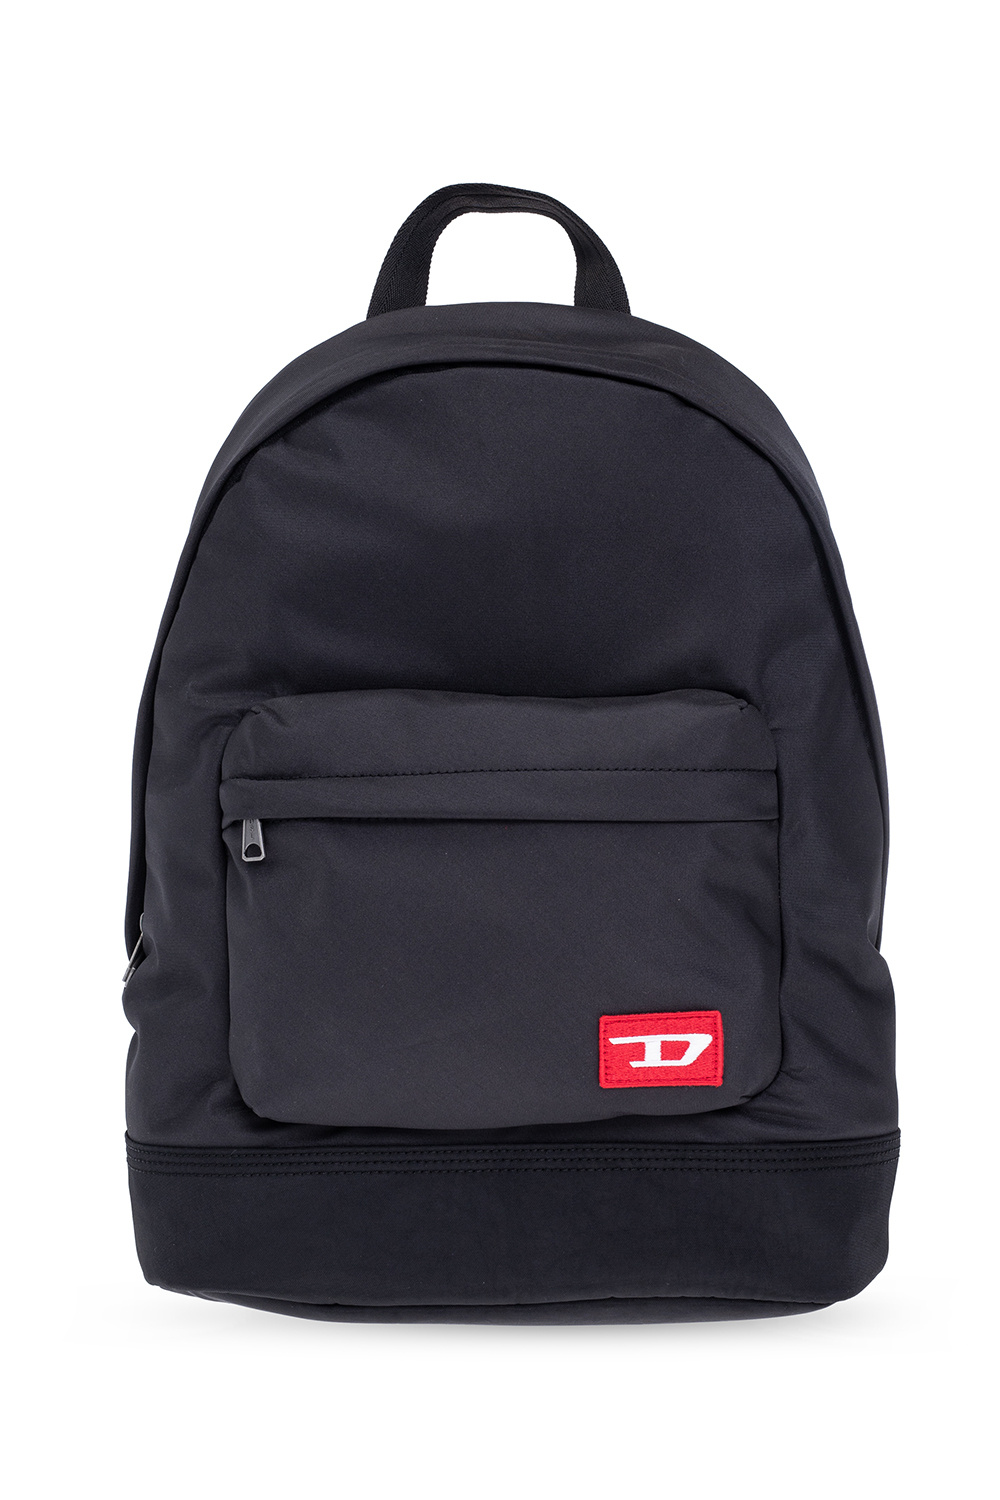 Diesel ‘Farb’ logo-plaque backpack